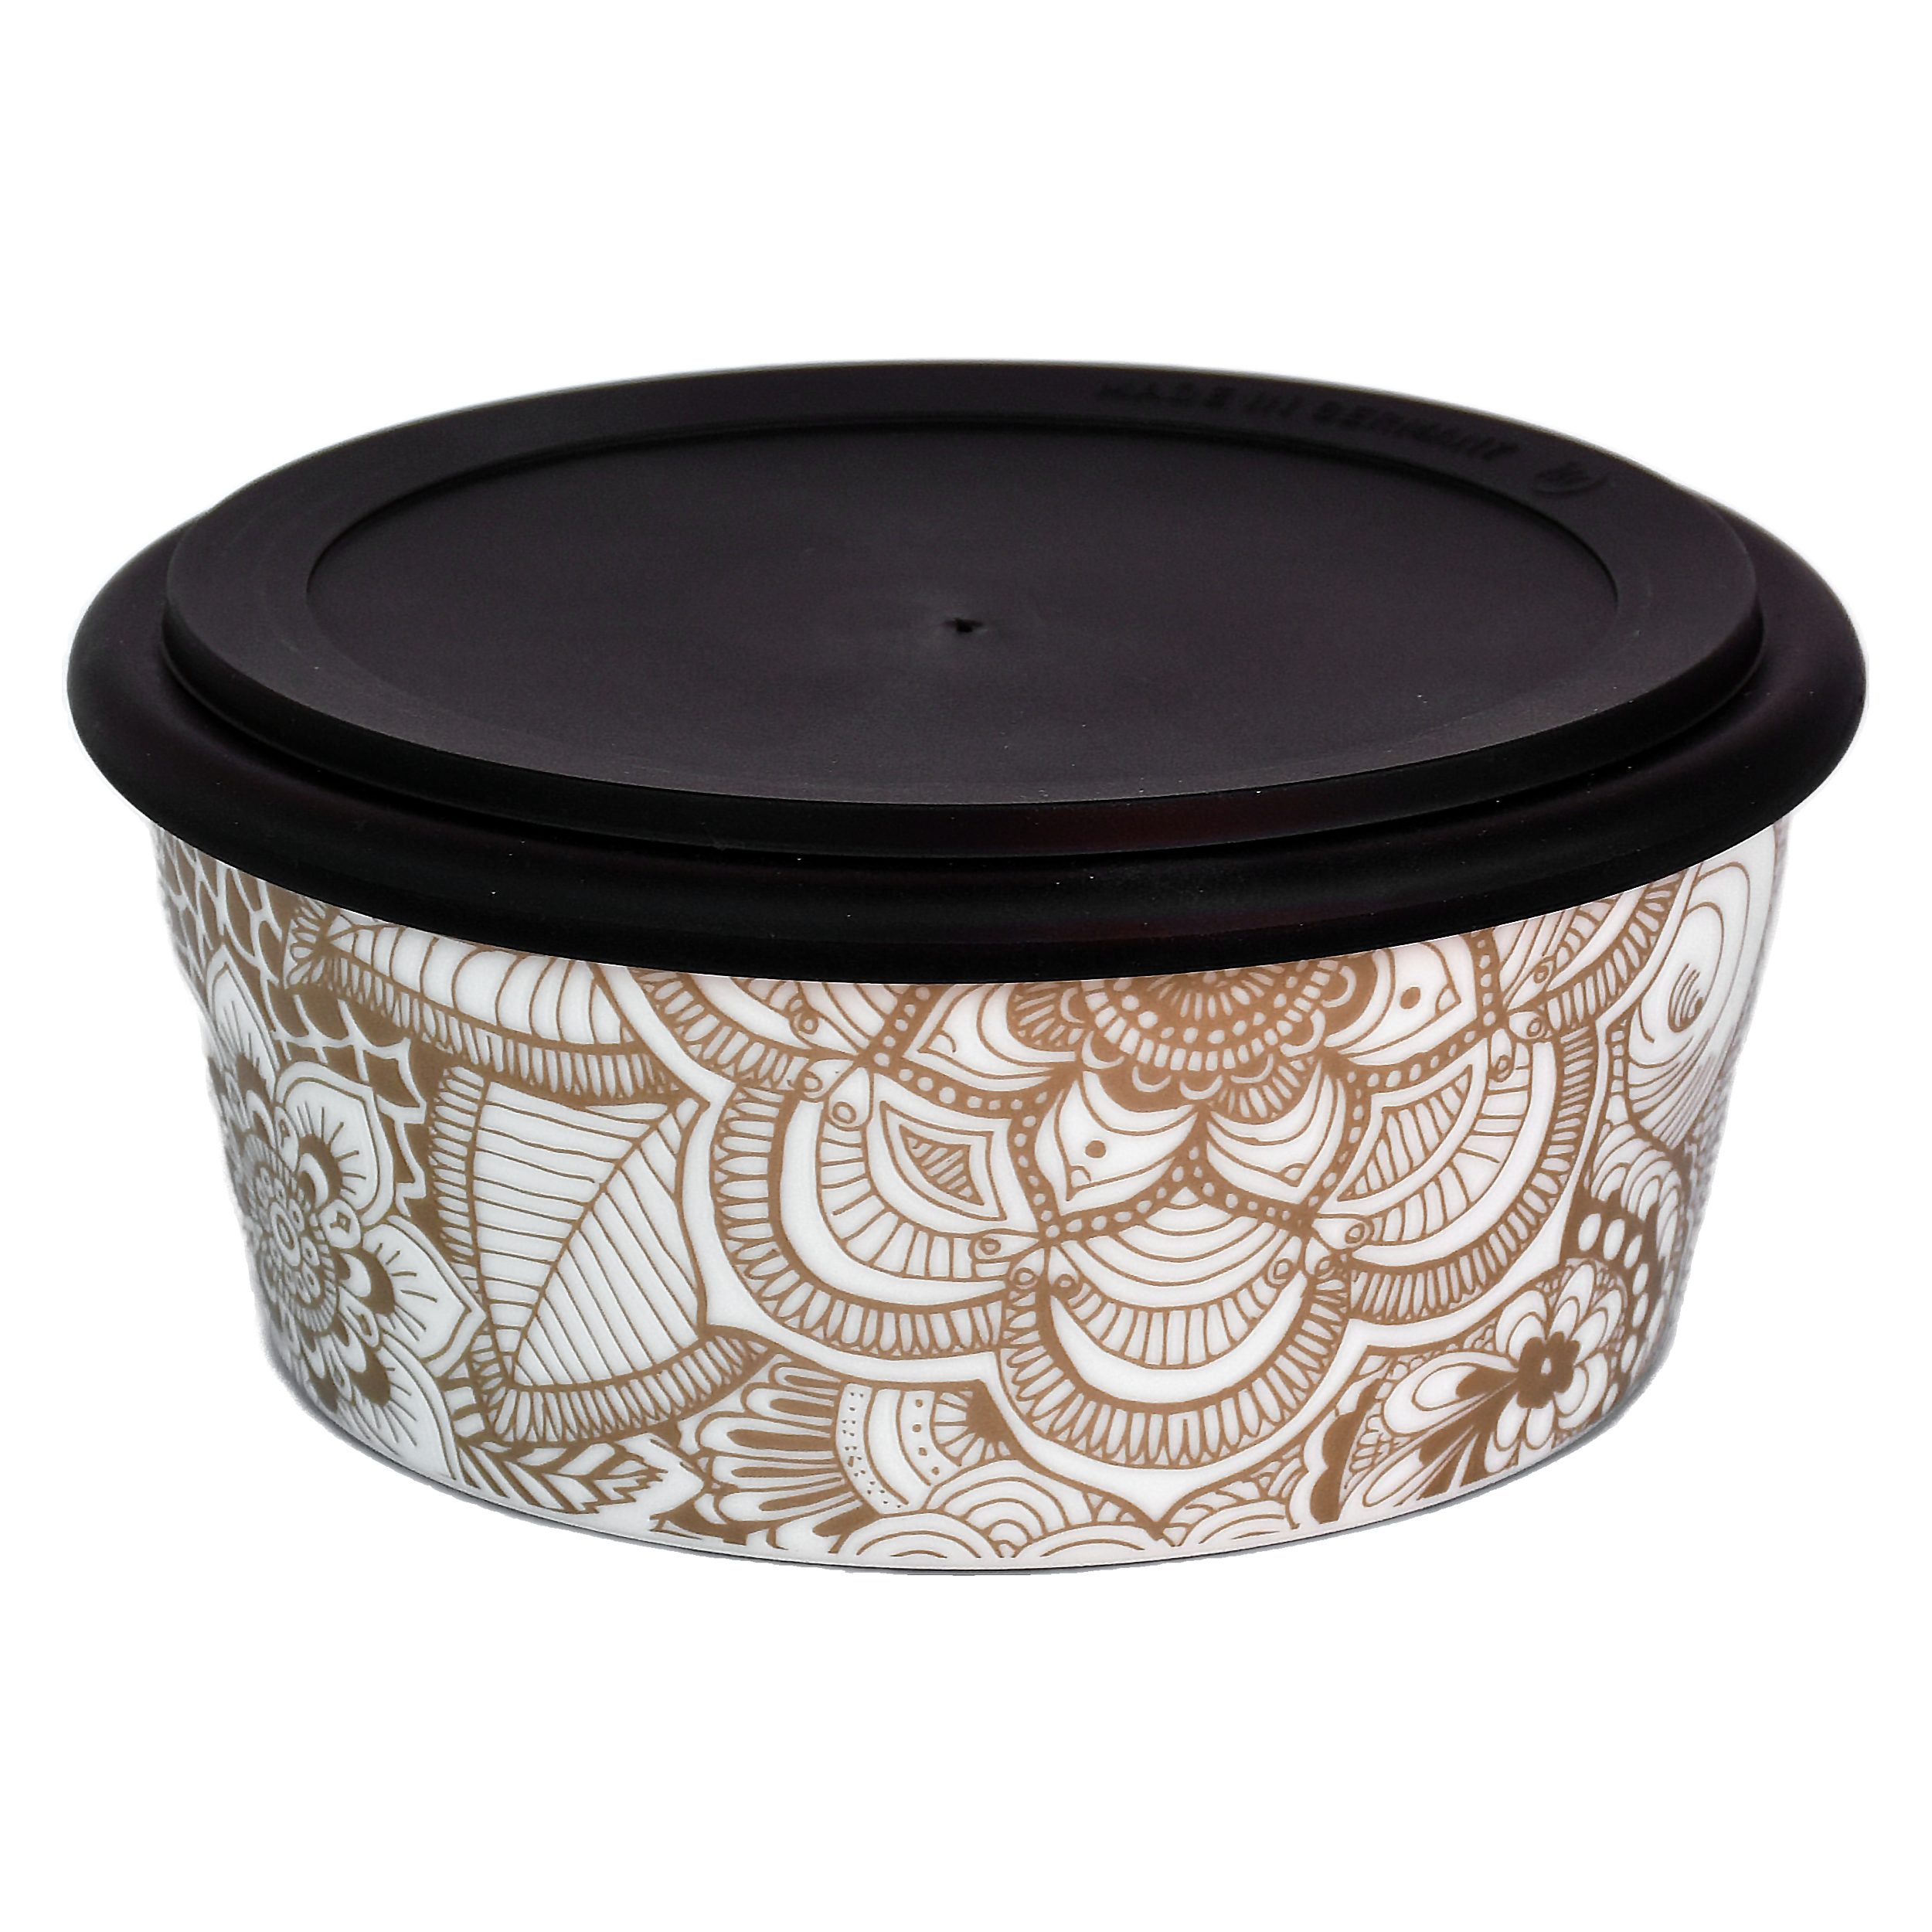 Mahlwerck Manufaktur Lunchbox Bowl2Go, Porzellan, (Lunchbox mit auslaufsicherem Deckel), spülmaschinengeeignet, mikrowellengeeignet, 100% klimaneutral Boho Gold